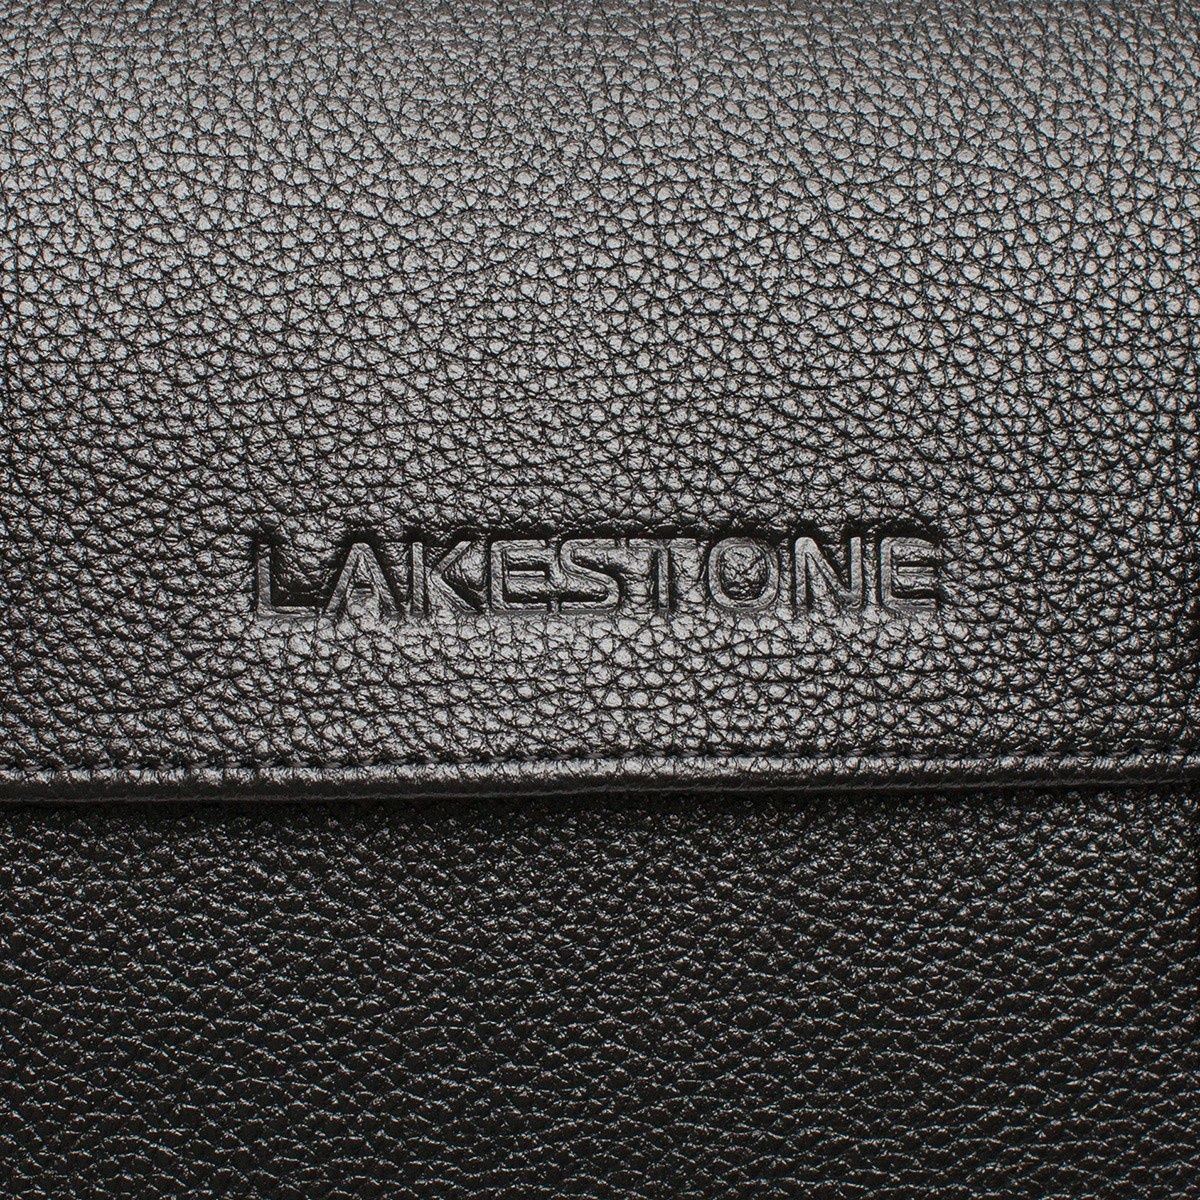   LAKESTONE Bloy Black, 981998/BL, 